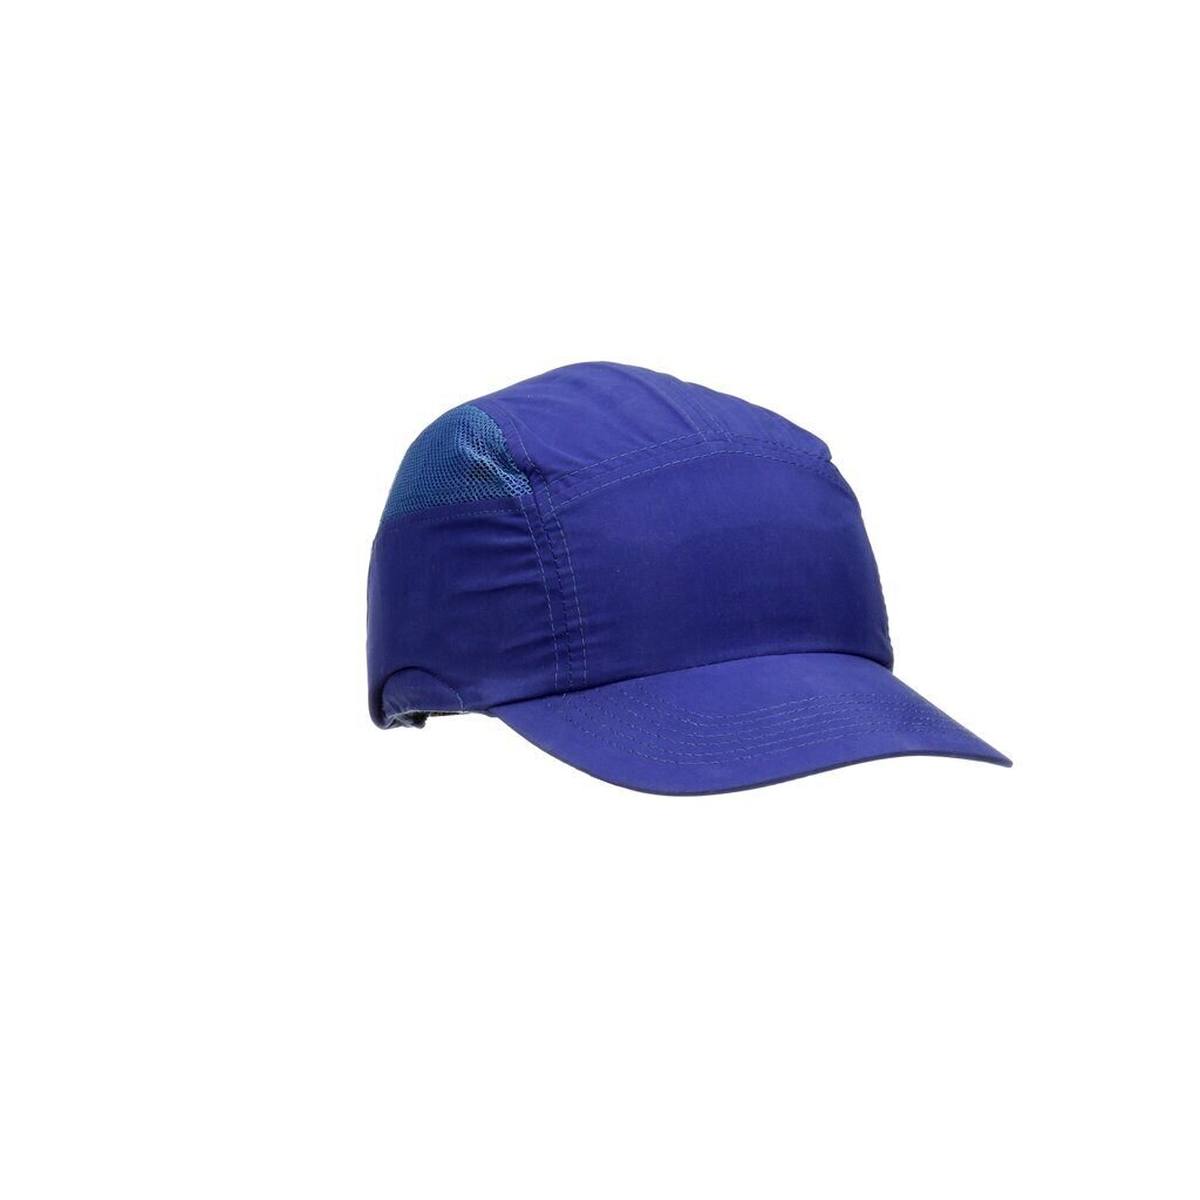 3M First Base Plus - Bump cap in royal blue - standard peak 70 mm, EN812